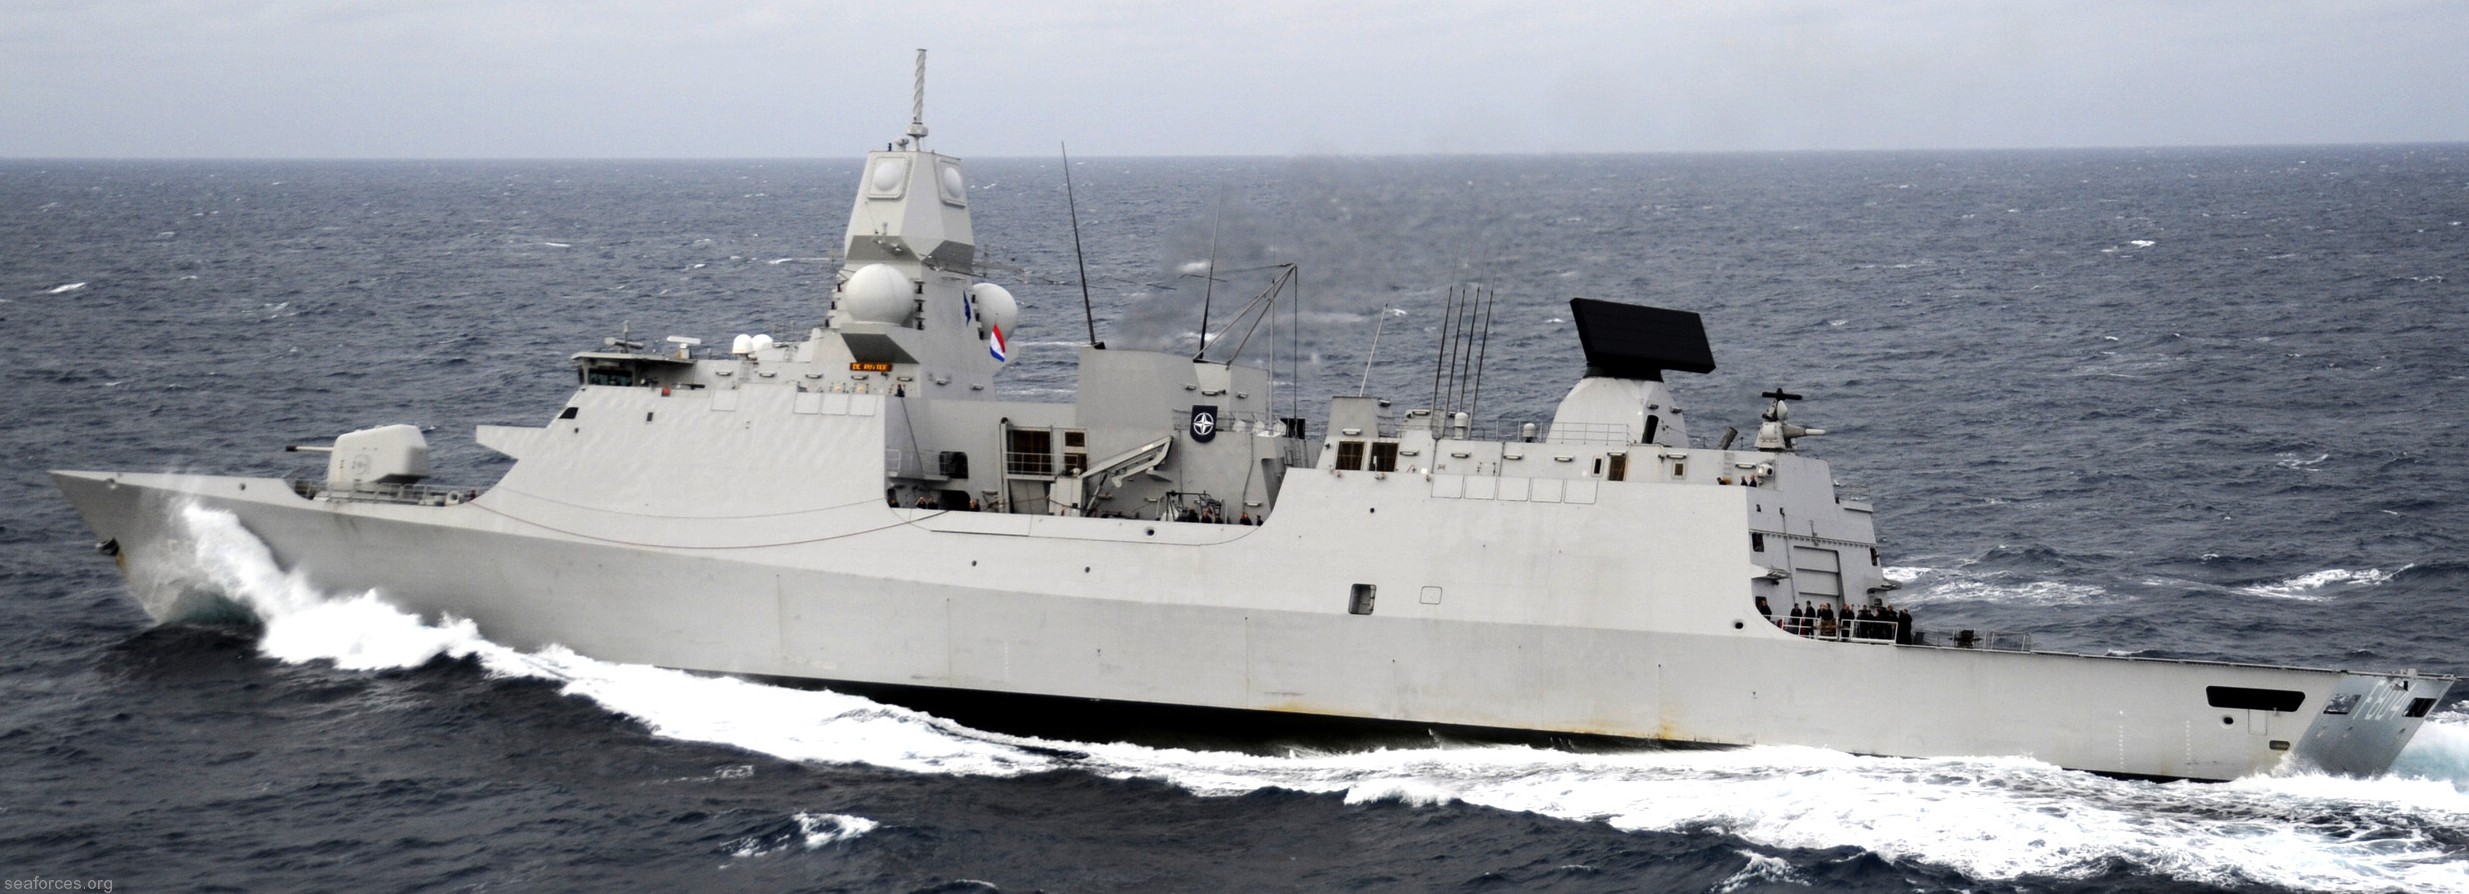 f-804 hnlms de ruyter guided missile frigate ffg lcf royal netherlands navy 12 nato standing response force